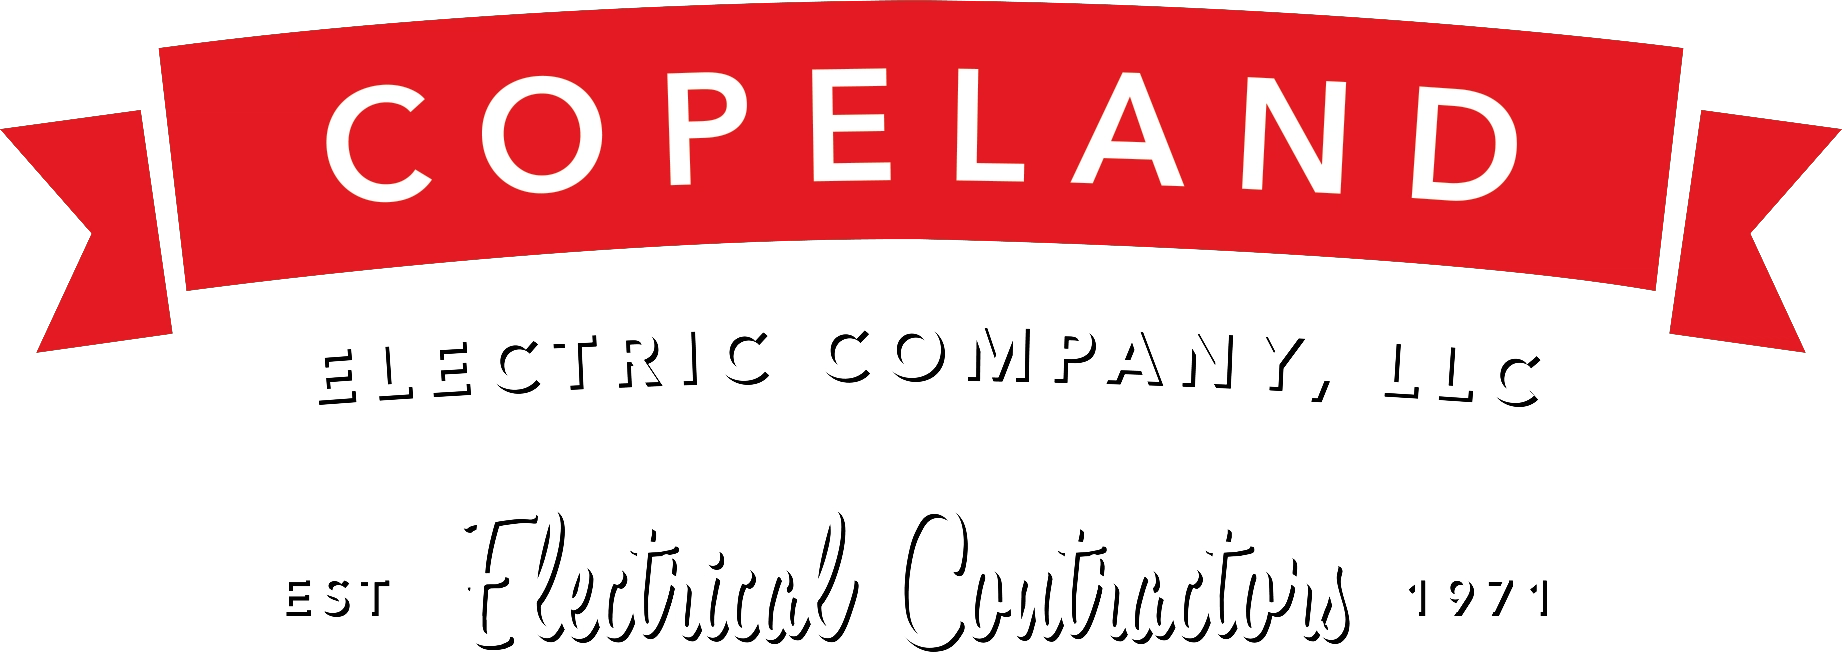 Copeland Electric Co., Inc. Logo